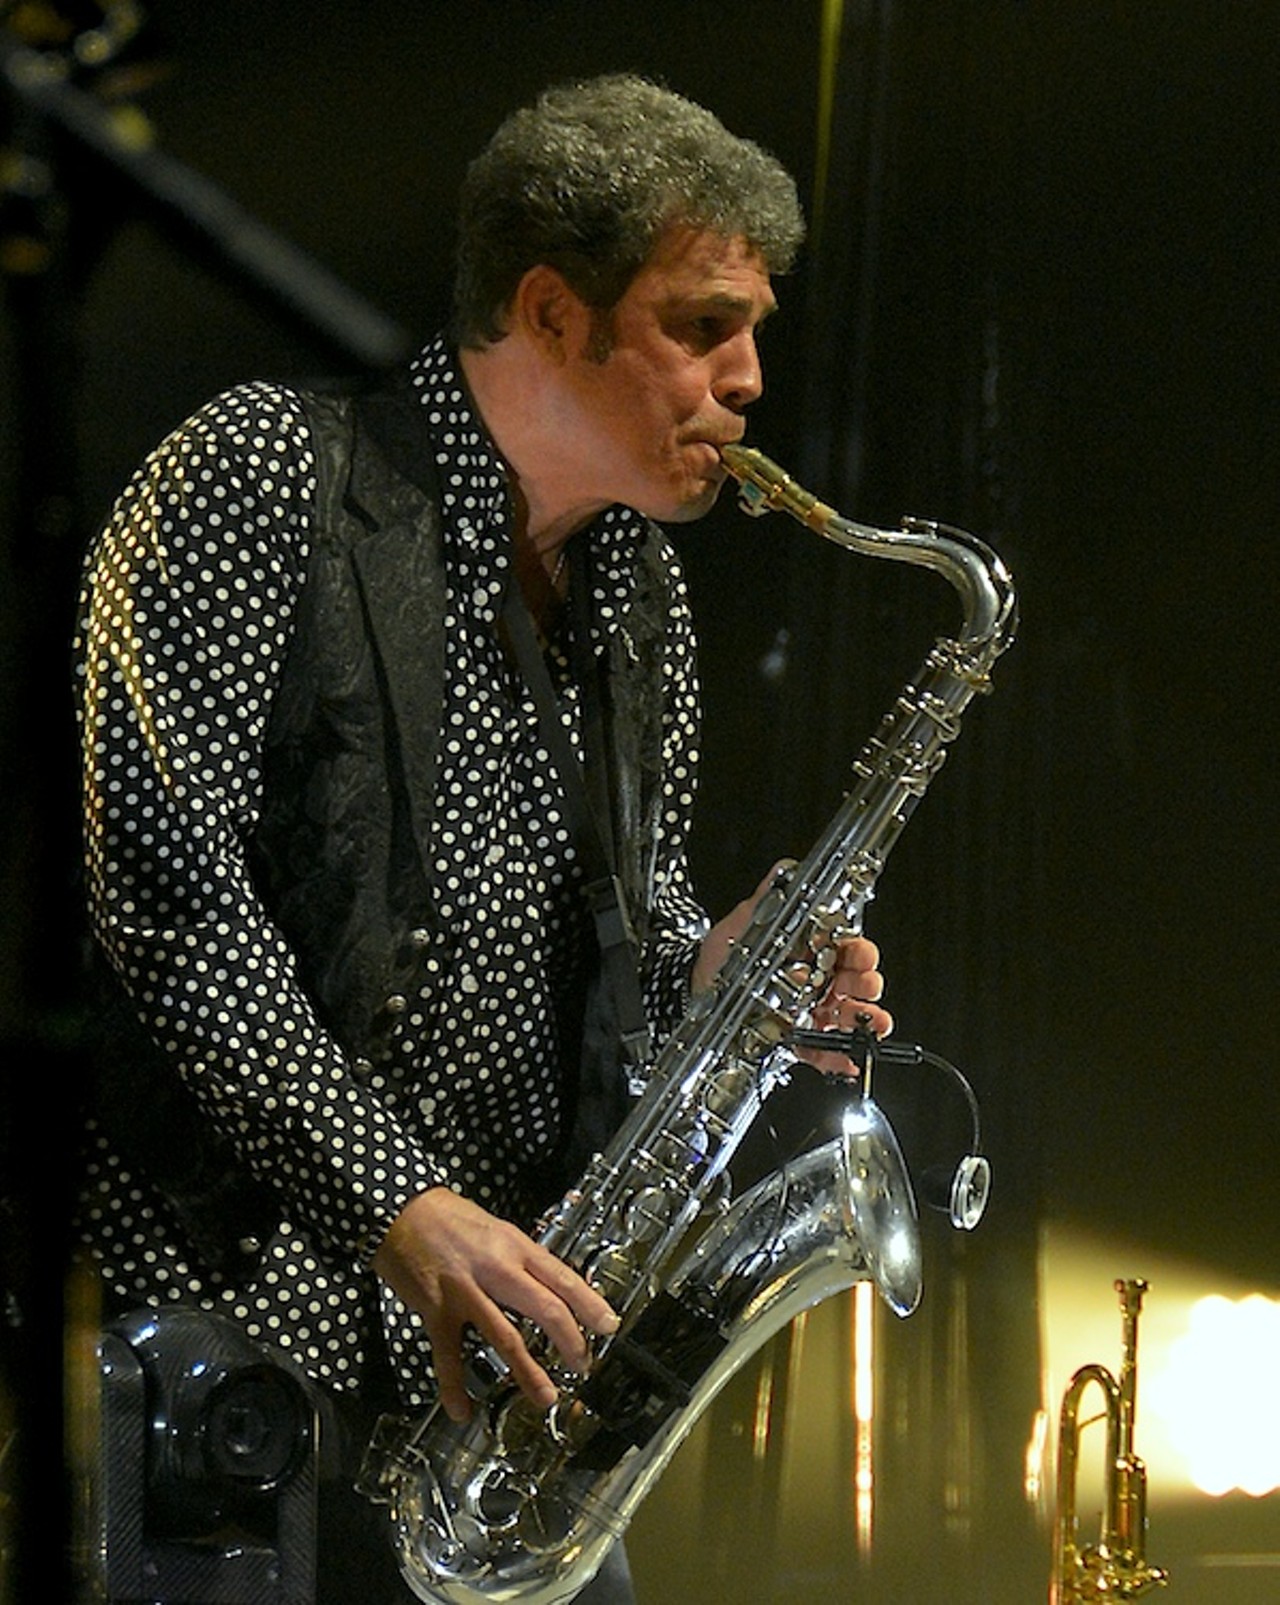 Billy Joel Performing at Quicken Loans Arena